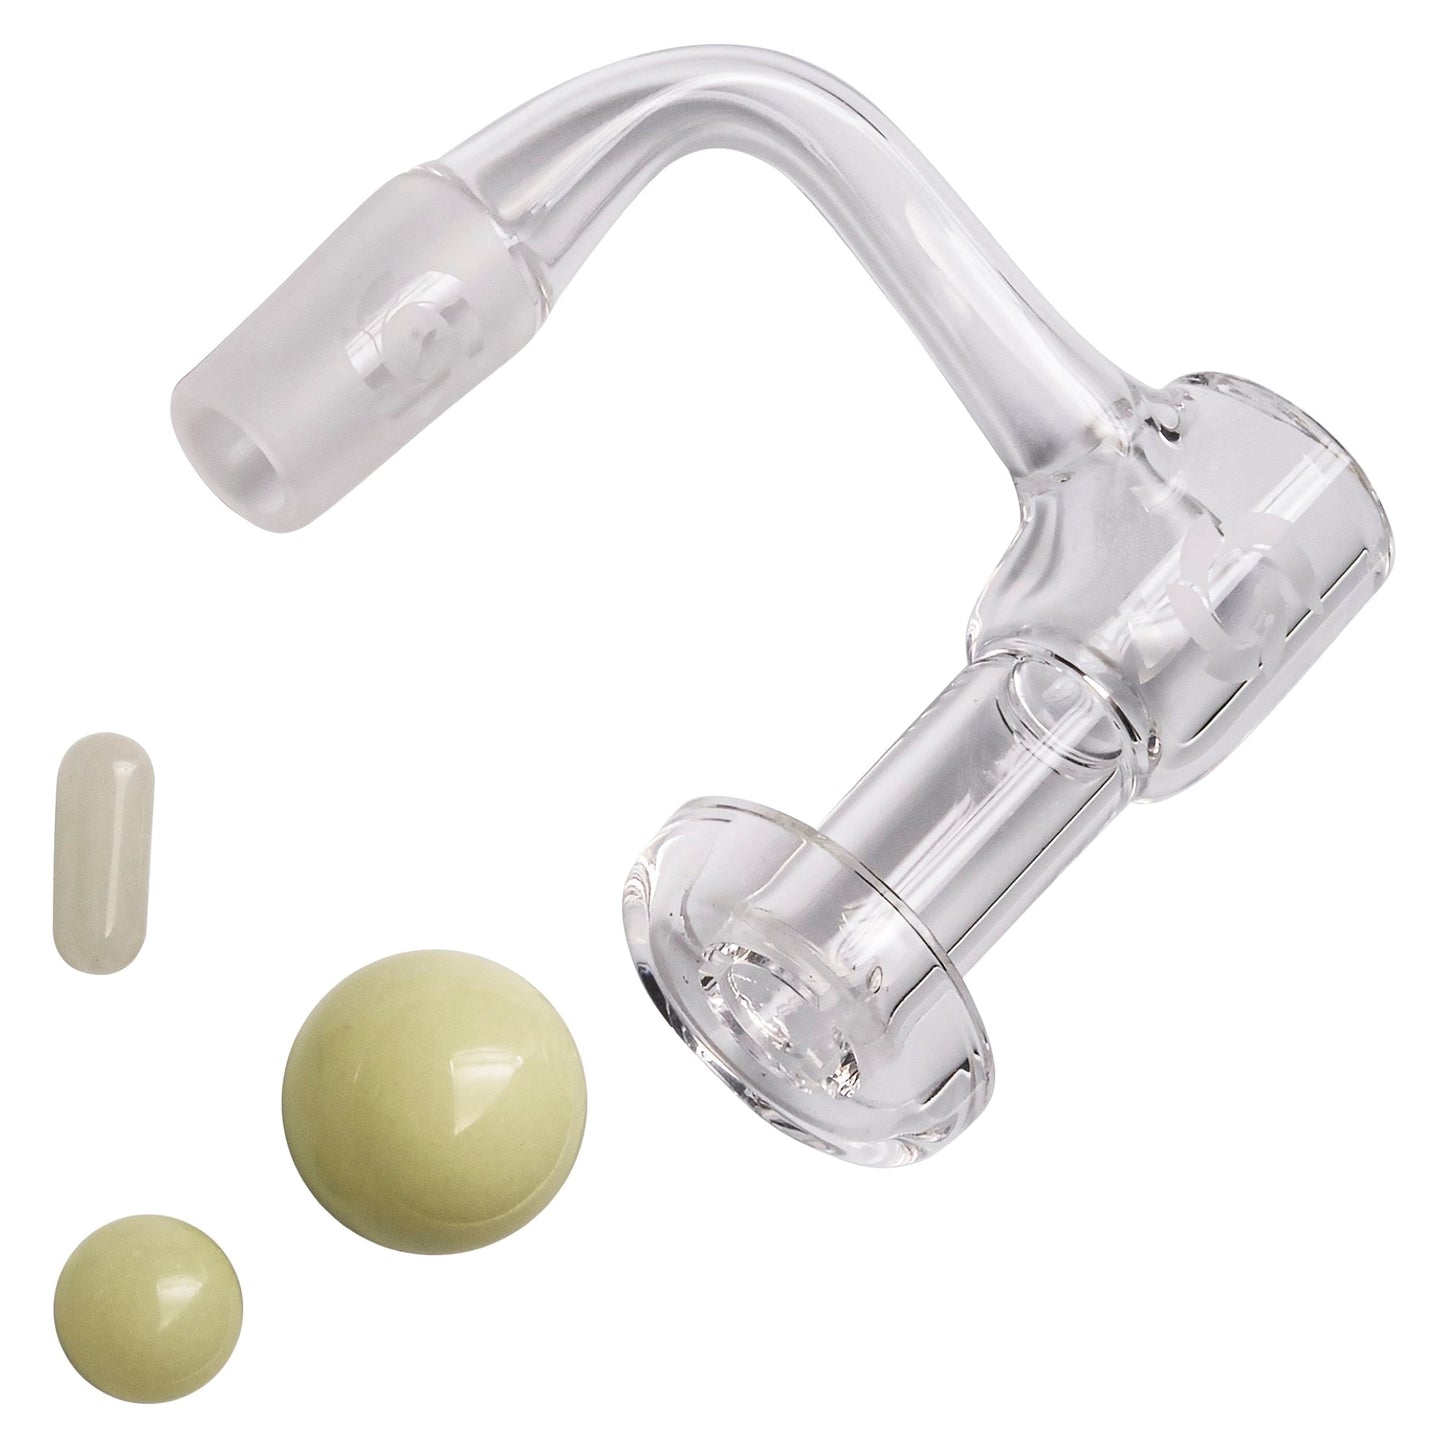 Glasshouse Mini Terp Vacuum Banger by Glasshouse | Mission Dispensary